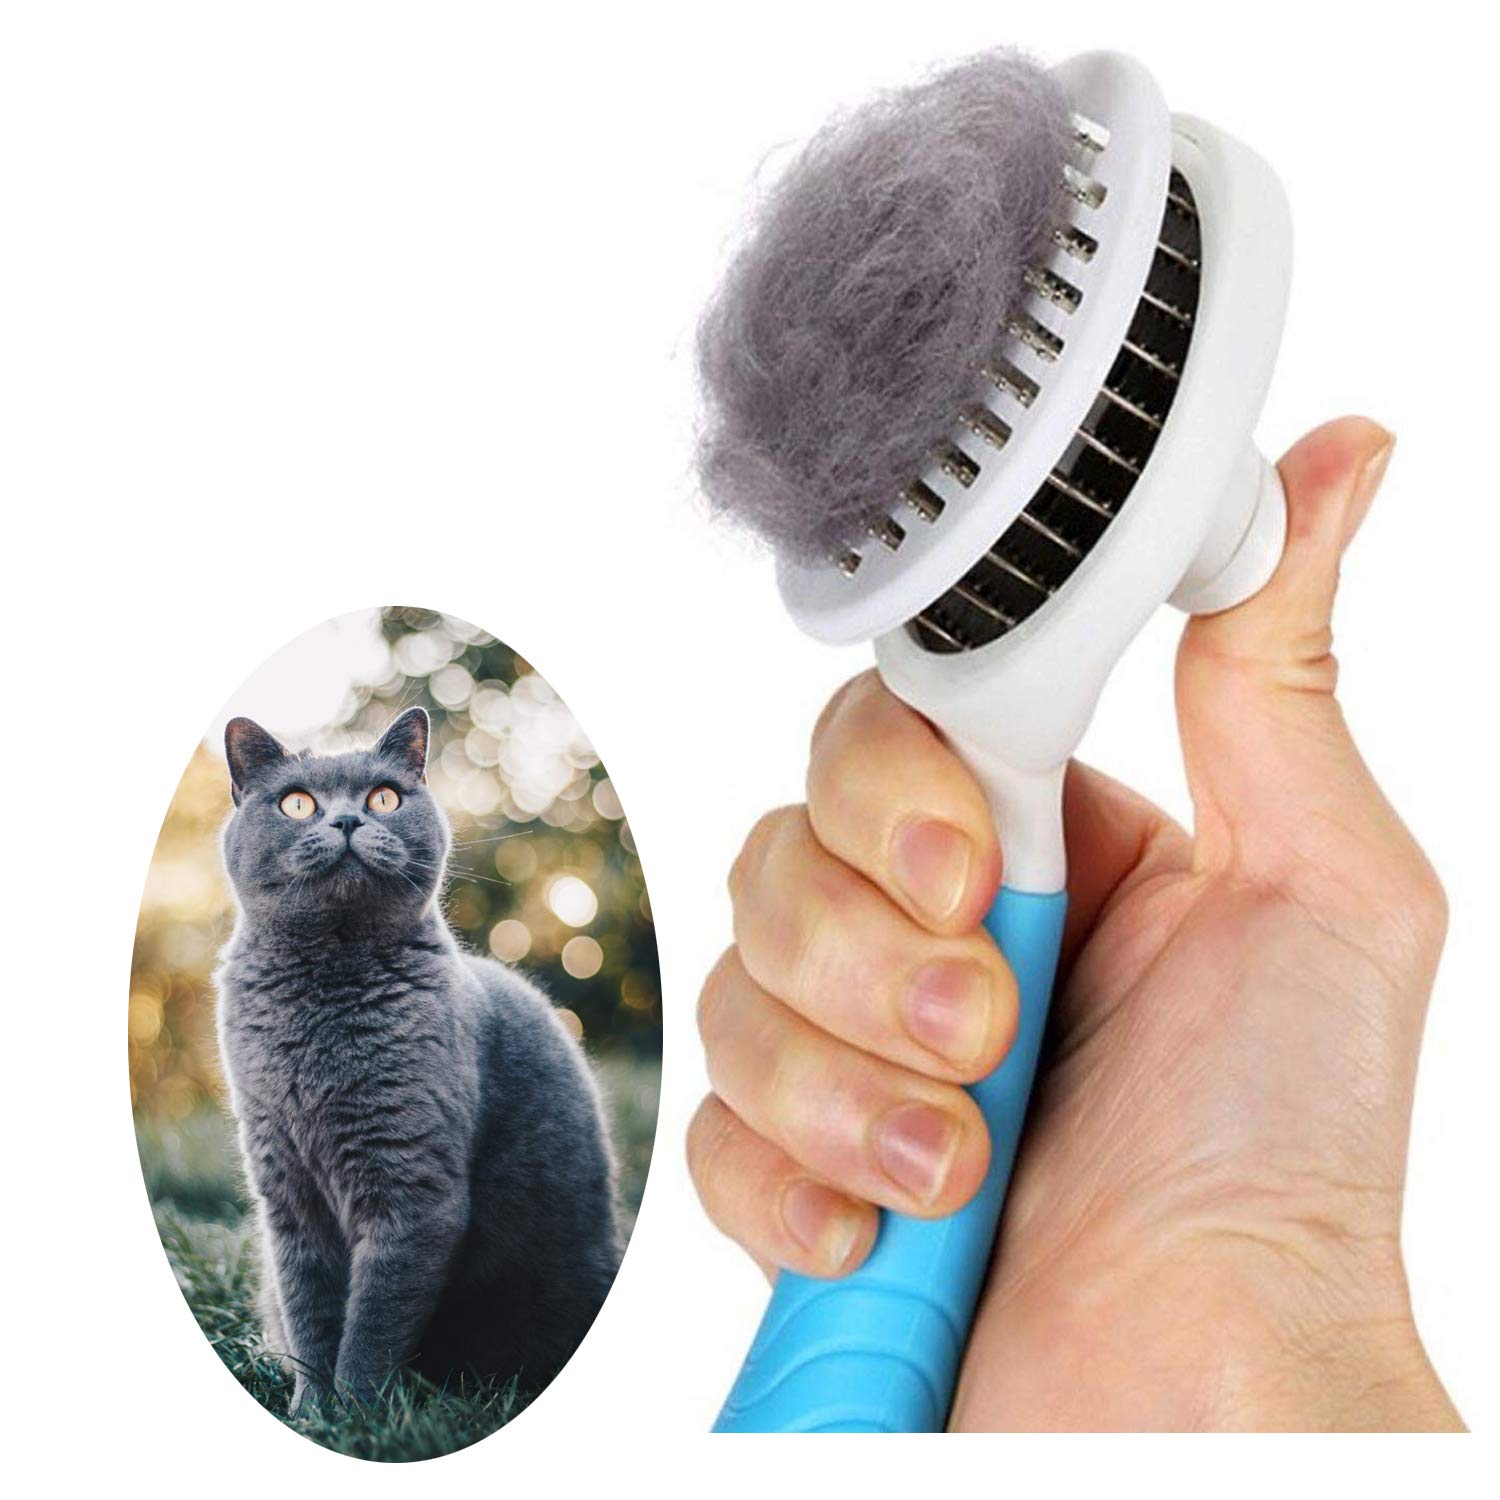 itPlus Self-Cleaning Cat Grooming Brush